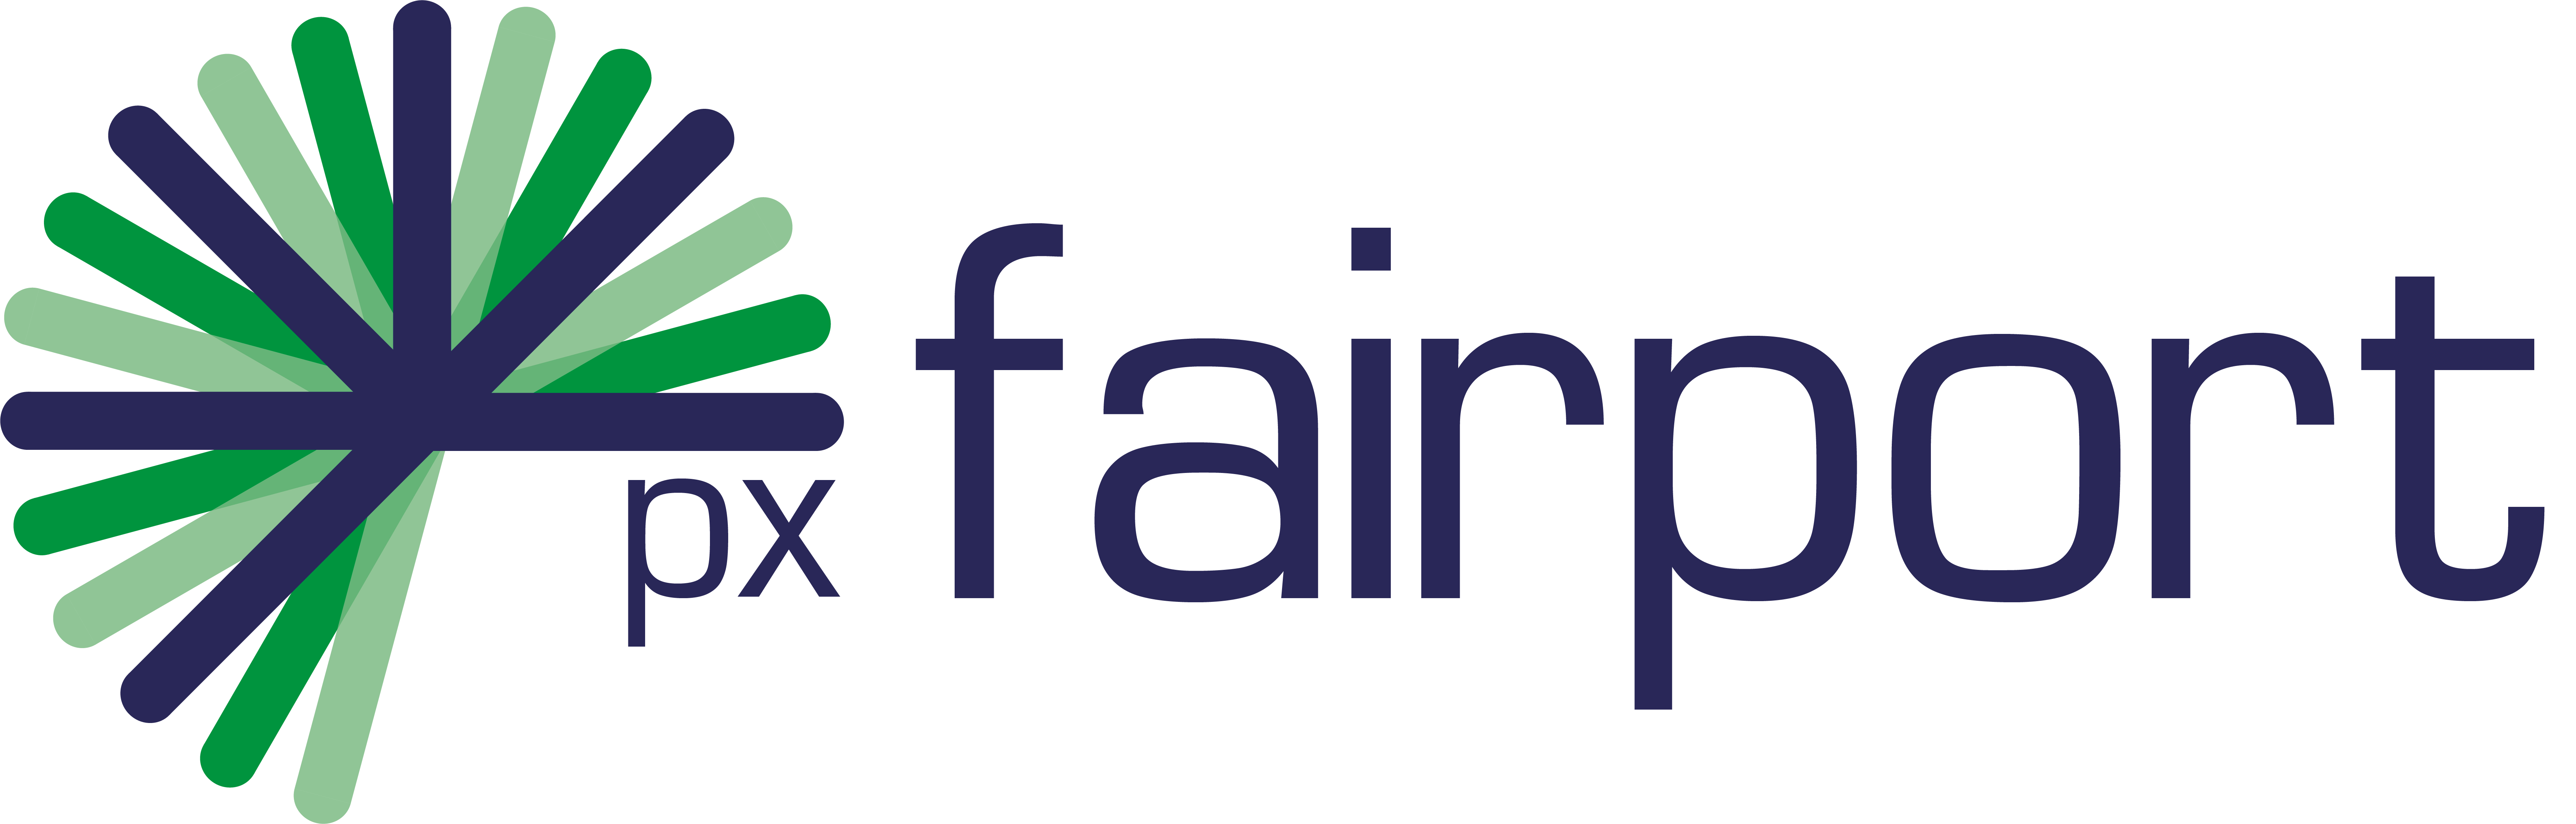 Fairport Engineering Ltd